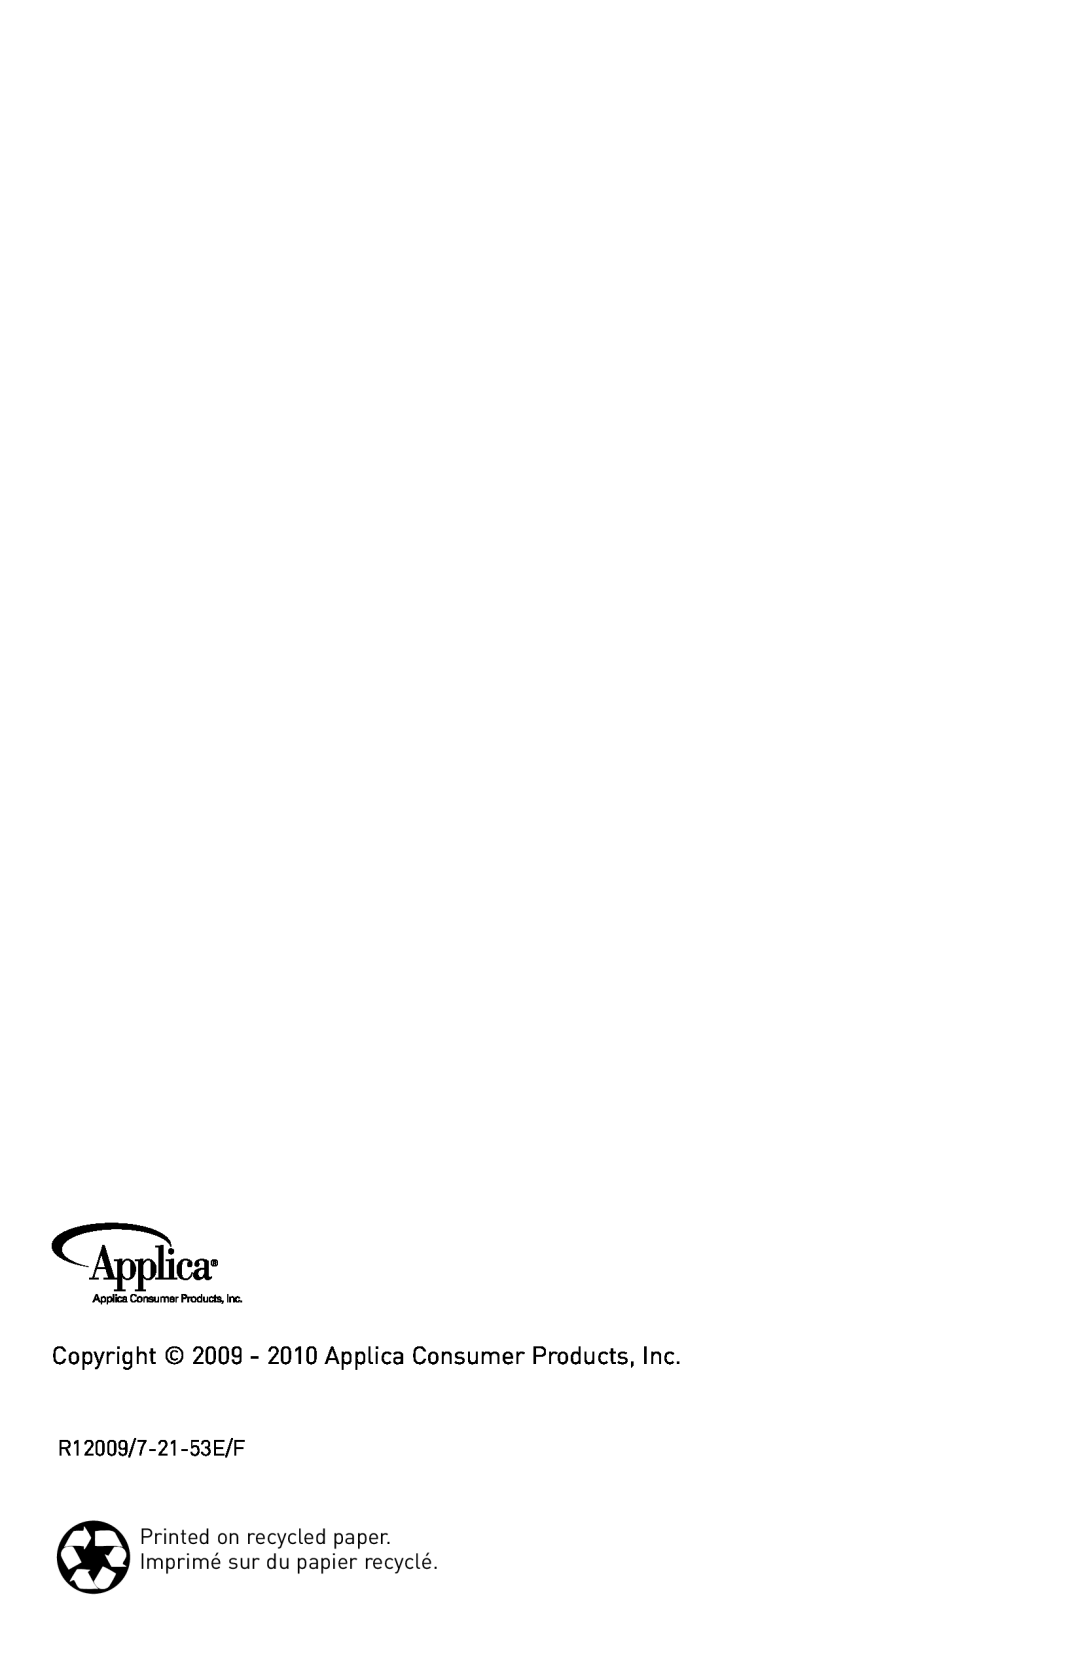 Black & Decker B000NJBYX0, B6000CUC manual Copyright 2009 - 2010 Applica Consumer Products, Inc, R12009/7-21-53E/F 